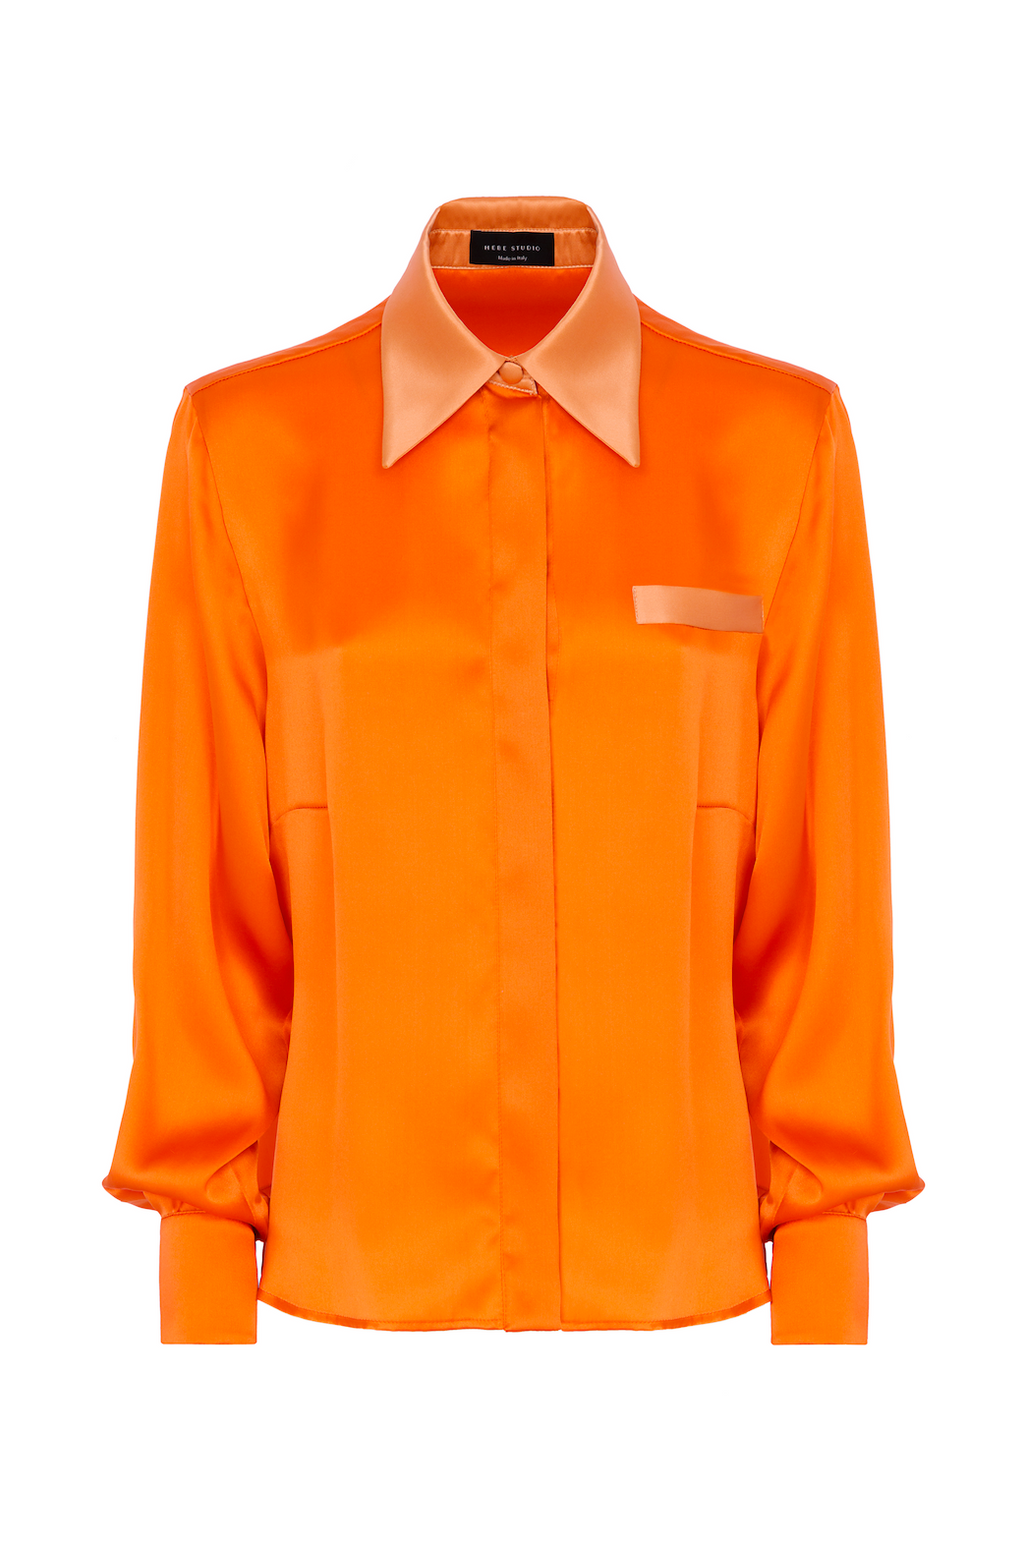 The Orange Silk Blouse